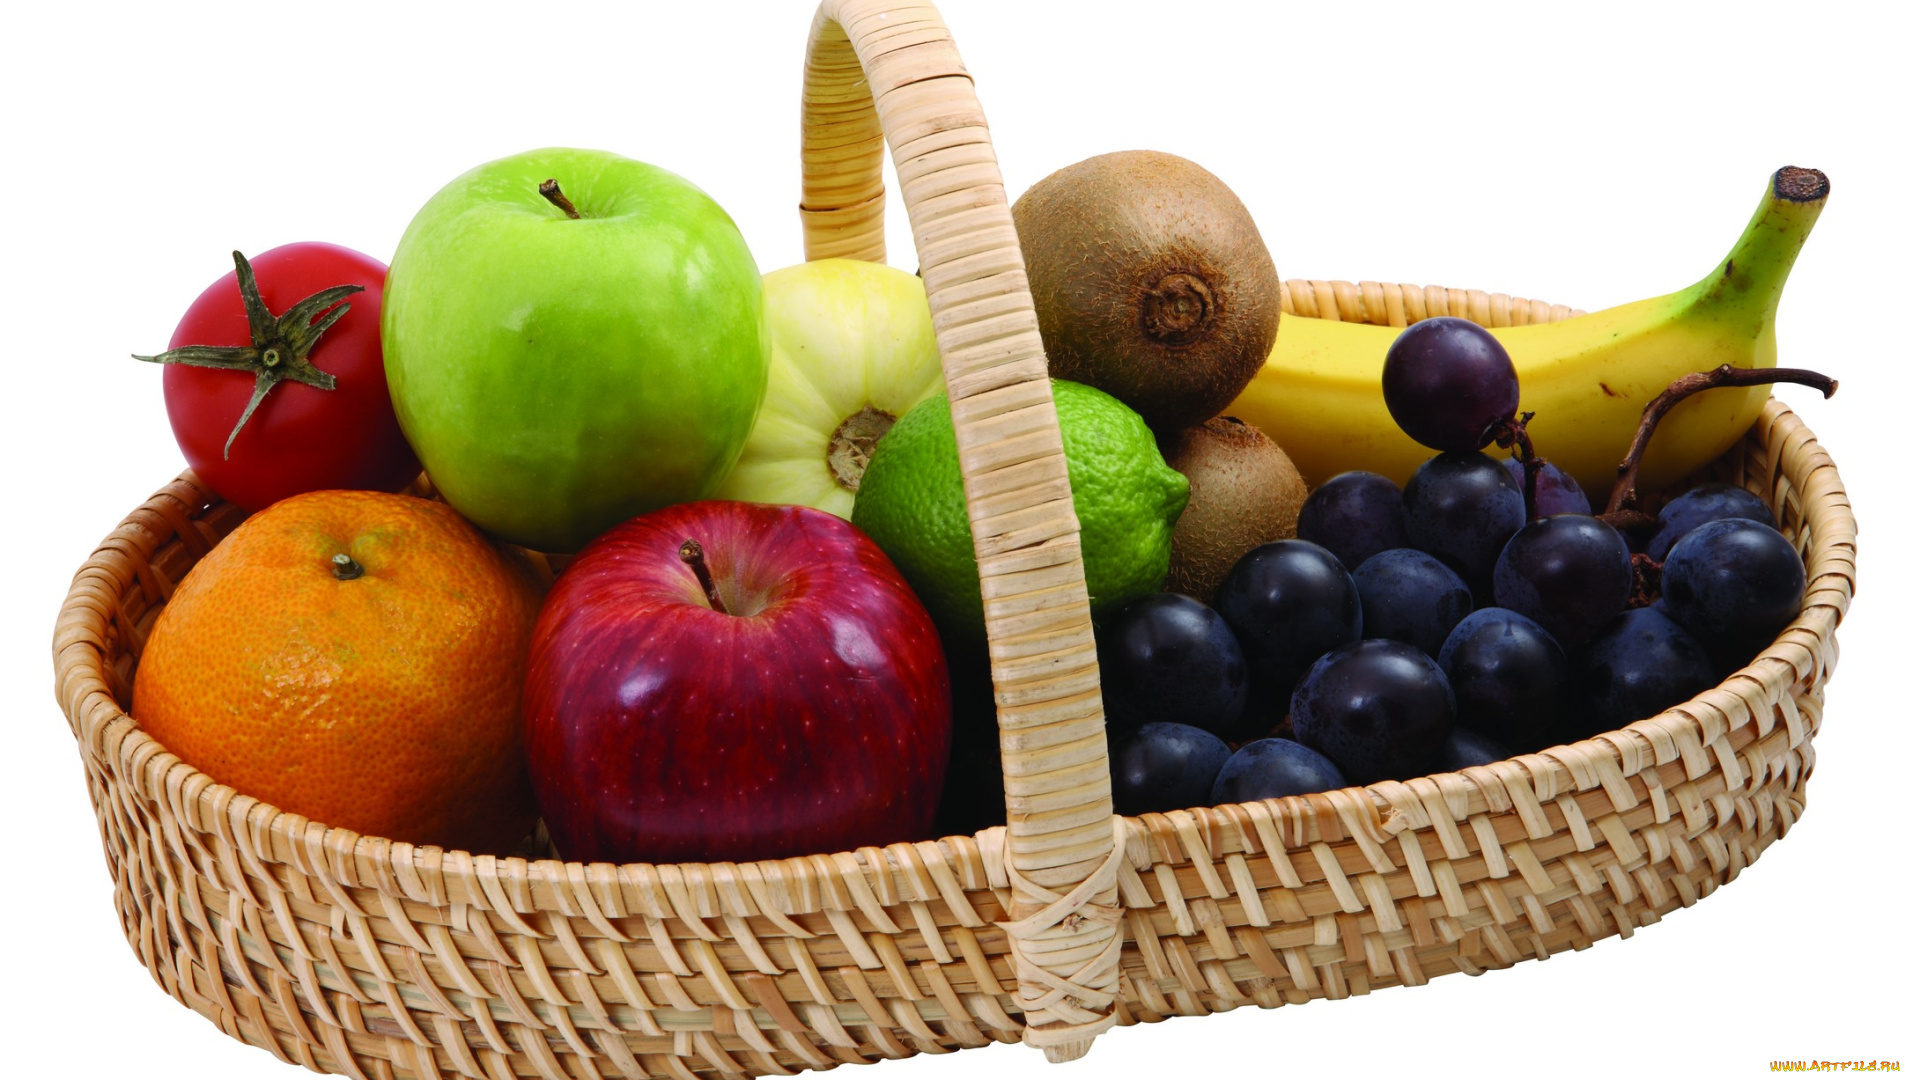 еда, фрукты, овощи, вместе, корзинка, фруткты, помидоры, яблоко, апельсин, банан, виноград, киви, лайм, кабачок, красный, жёлтый, зелёный